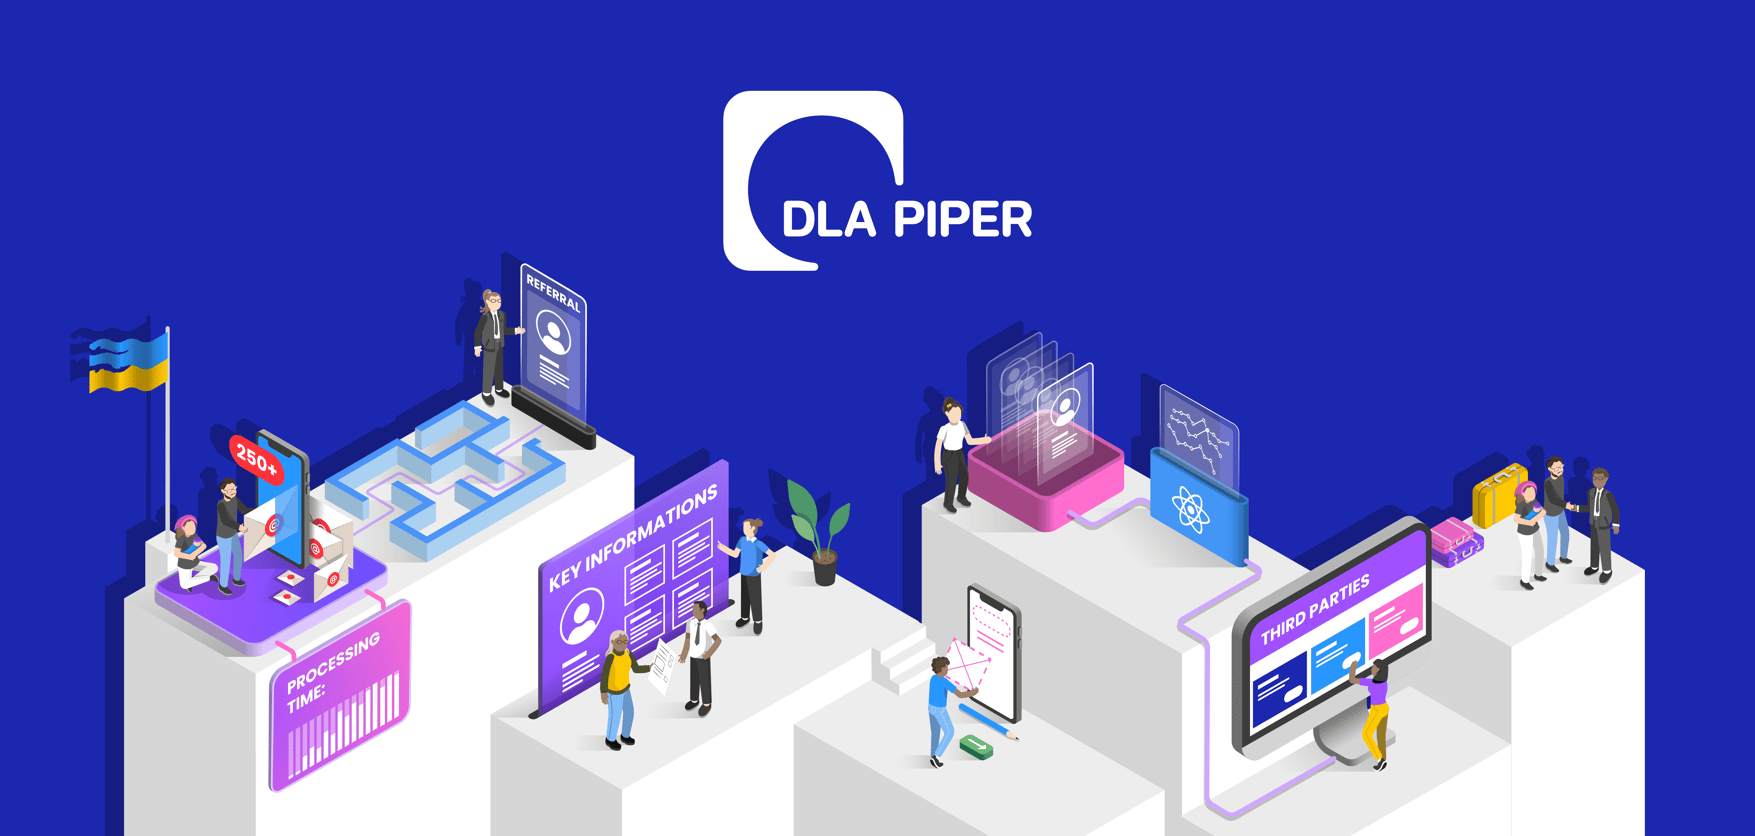 DLA Piper case study hero_large-01 2